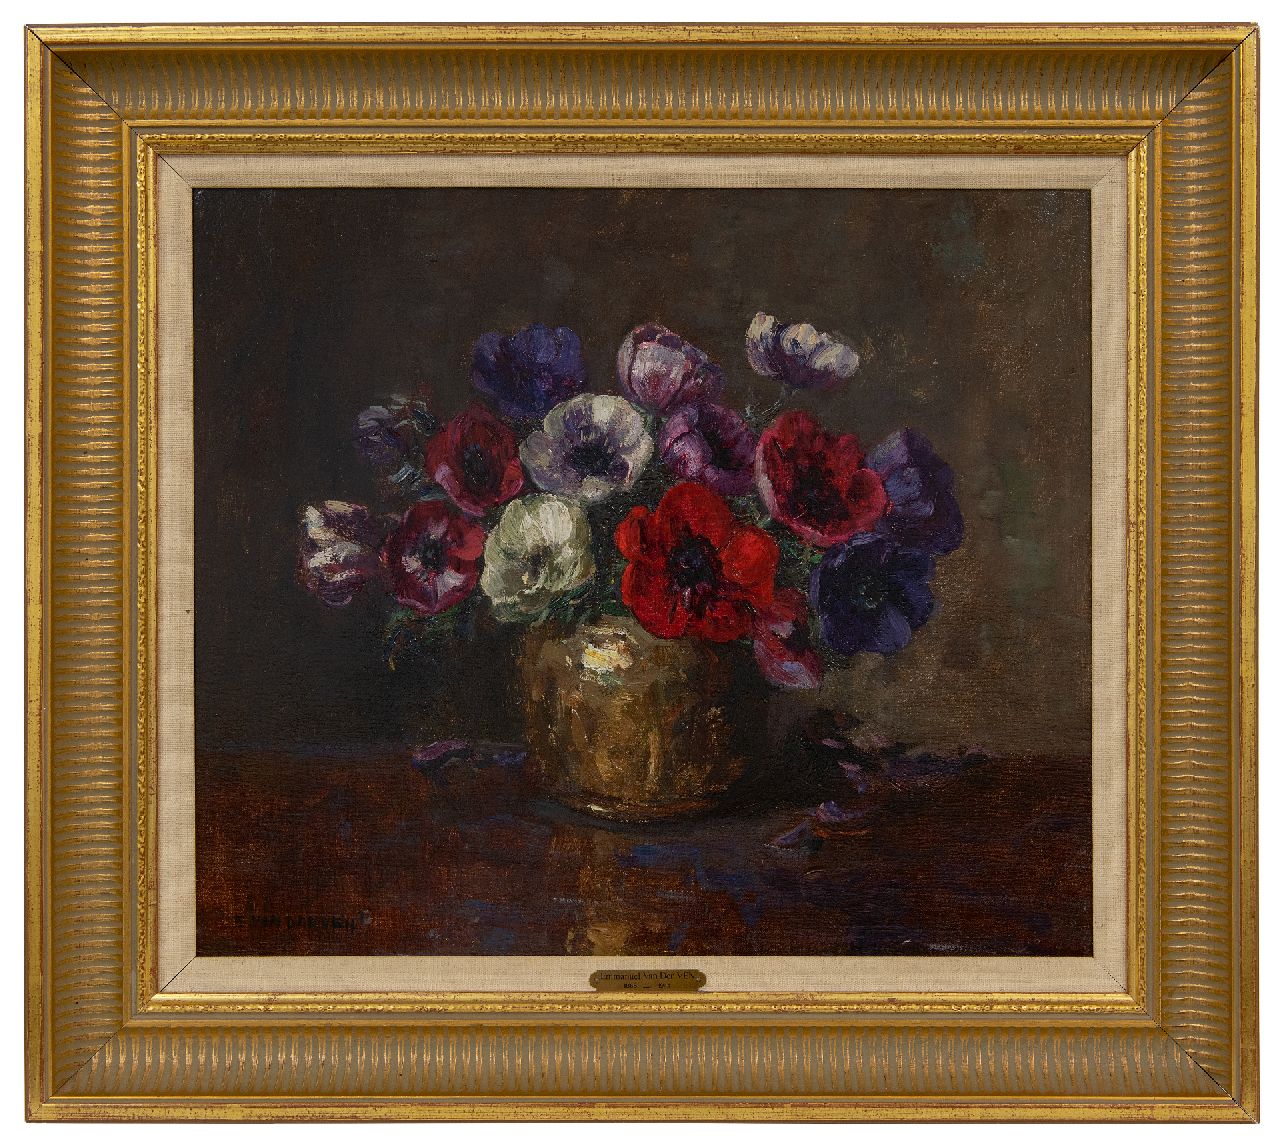 Ven E.E.G. van der | Emanuel Ernest Gerardus 'Manus' van der Ven | Paintings offered for sale | Anemones in a copper pot, oil on canvas 37.3 x 43.2 cm, signed l.l.